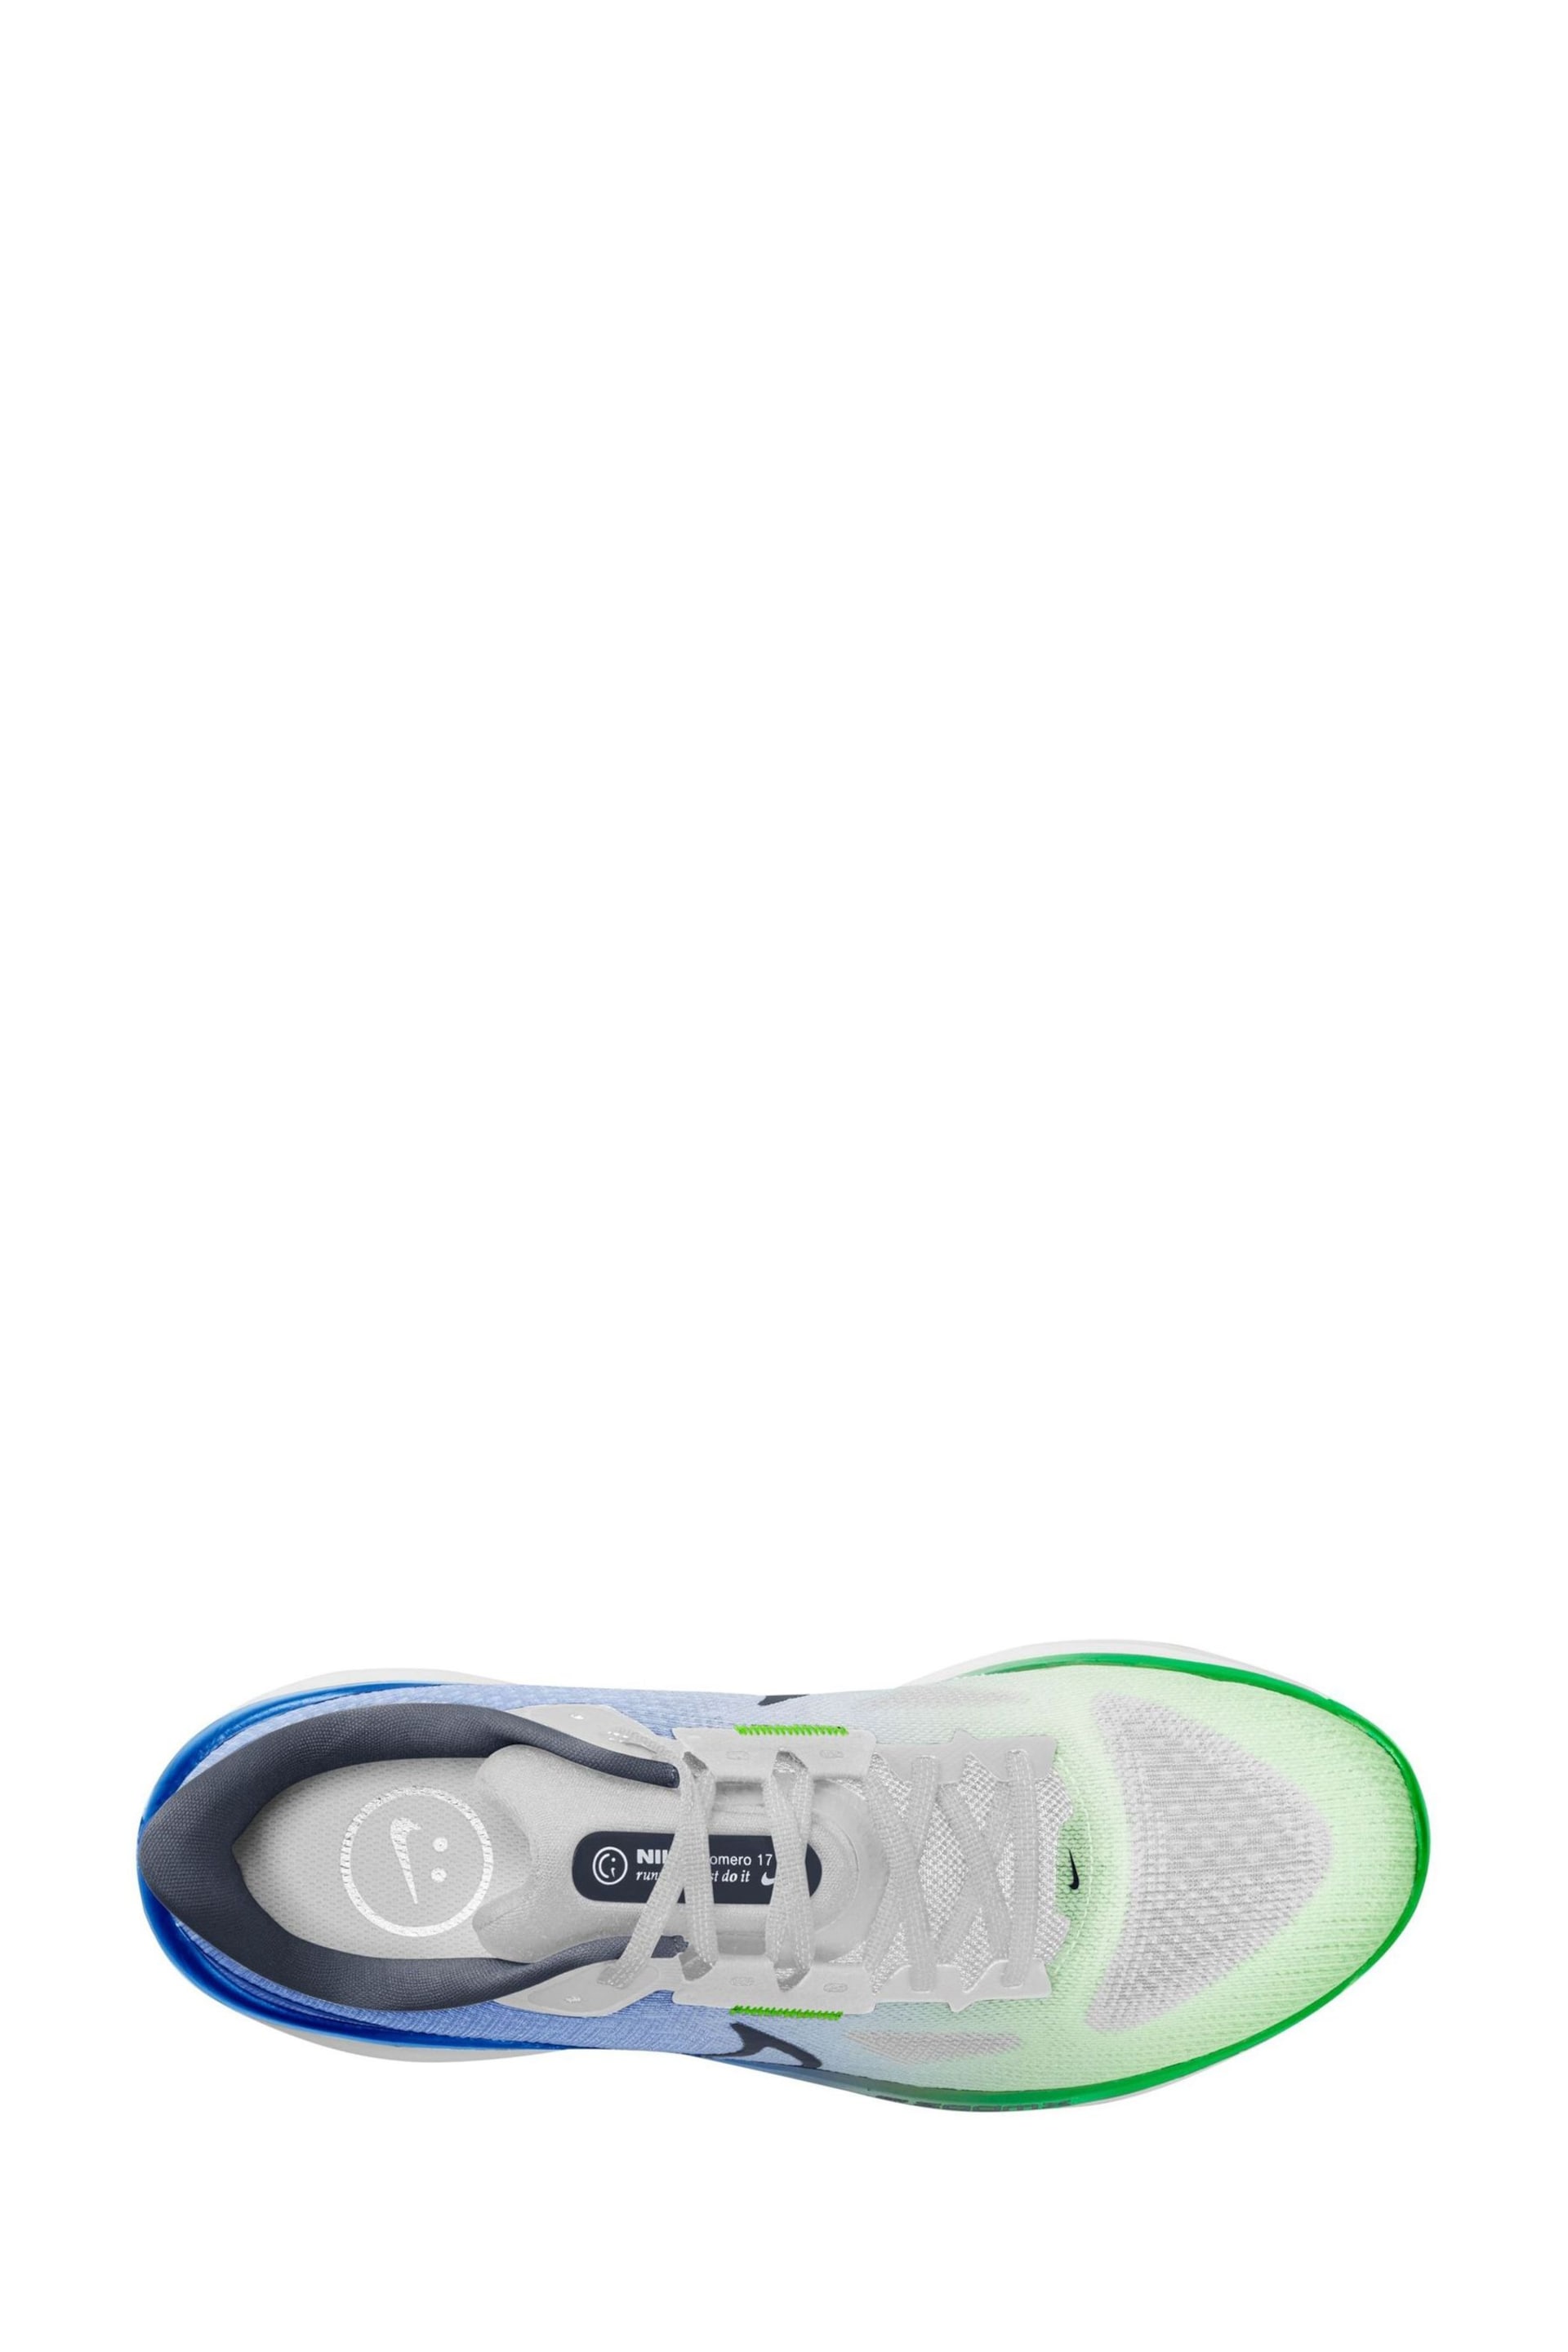 Nike White/Green Vomero 17 Road Running Trainers - Image 7 of 10